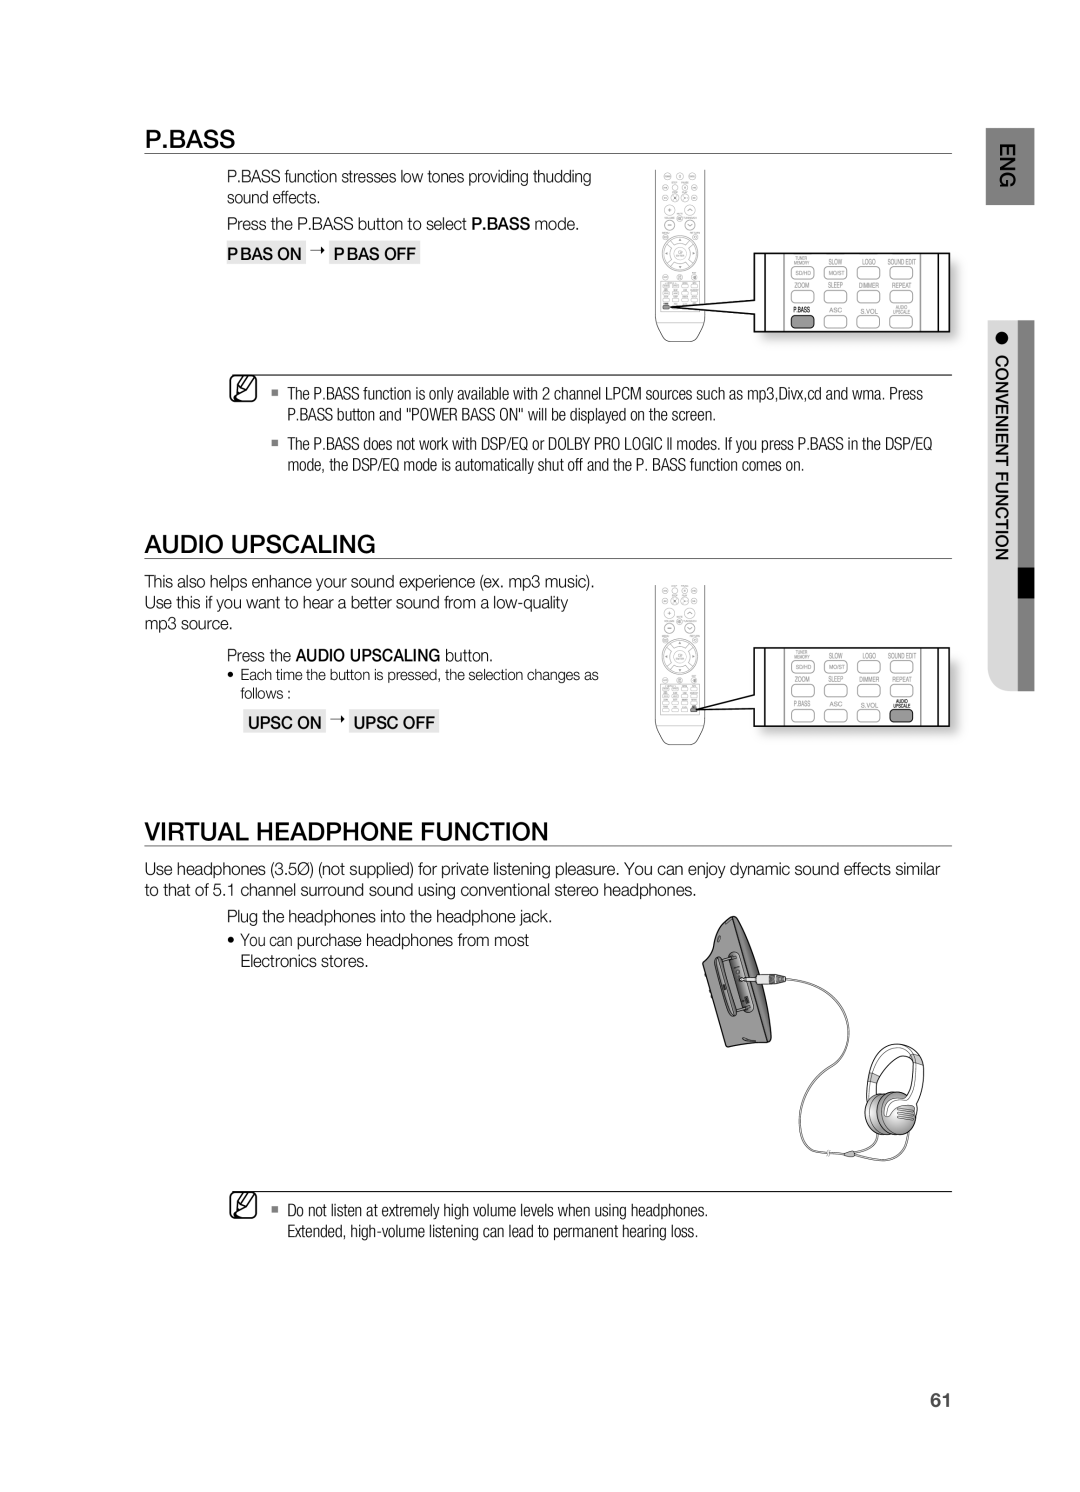 Samsung HT-TX715 user manual P.Bass, Audio Upscaling, VIrTUAL HEADPHONE FUNCTION 